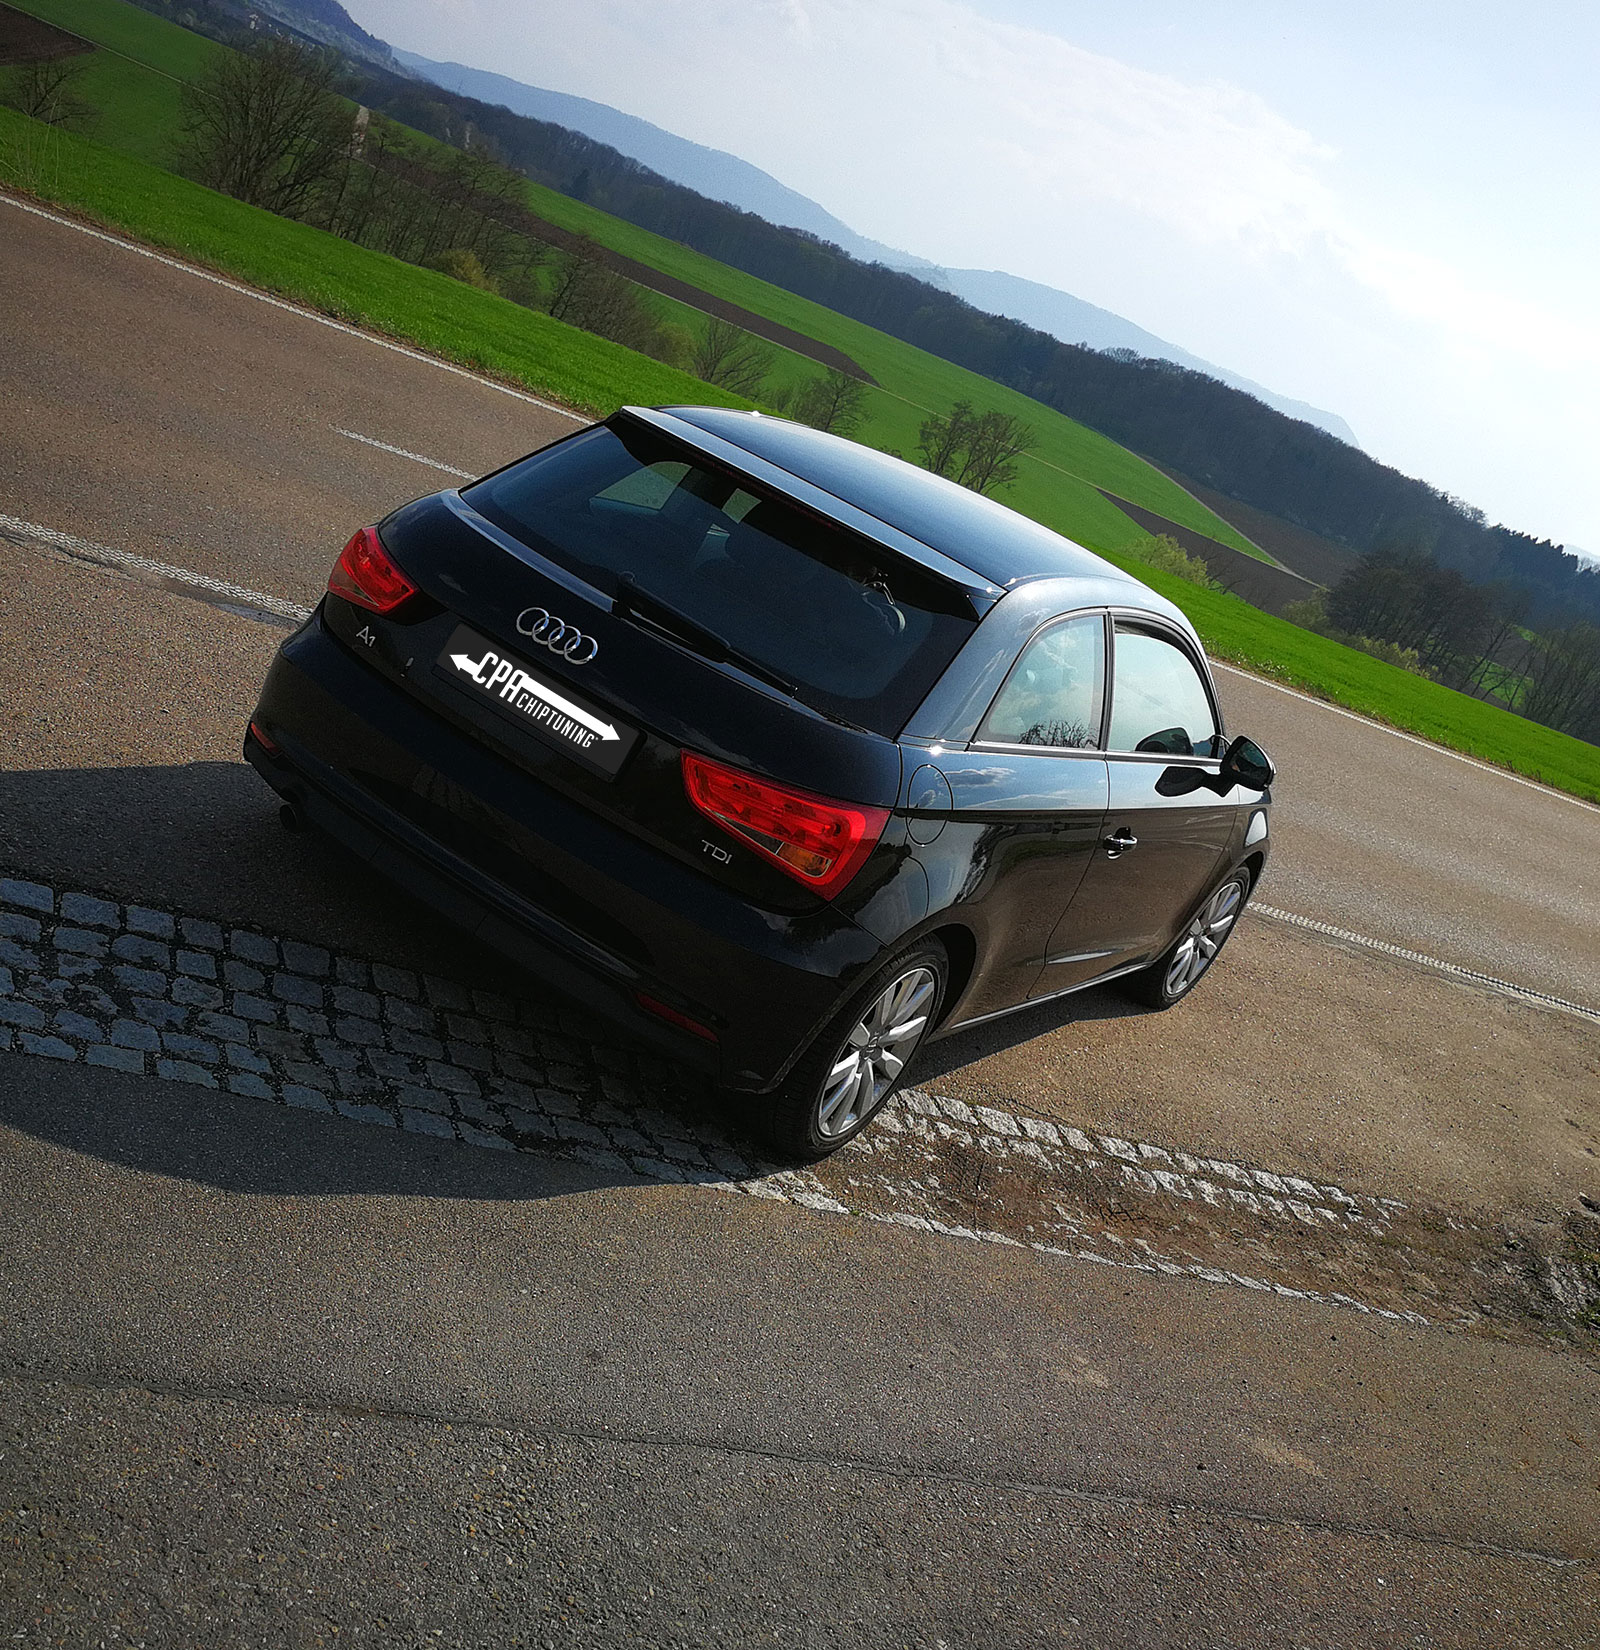 Prueba a largo plazo: Audi A1 1.4 TDI y CPA Connective System